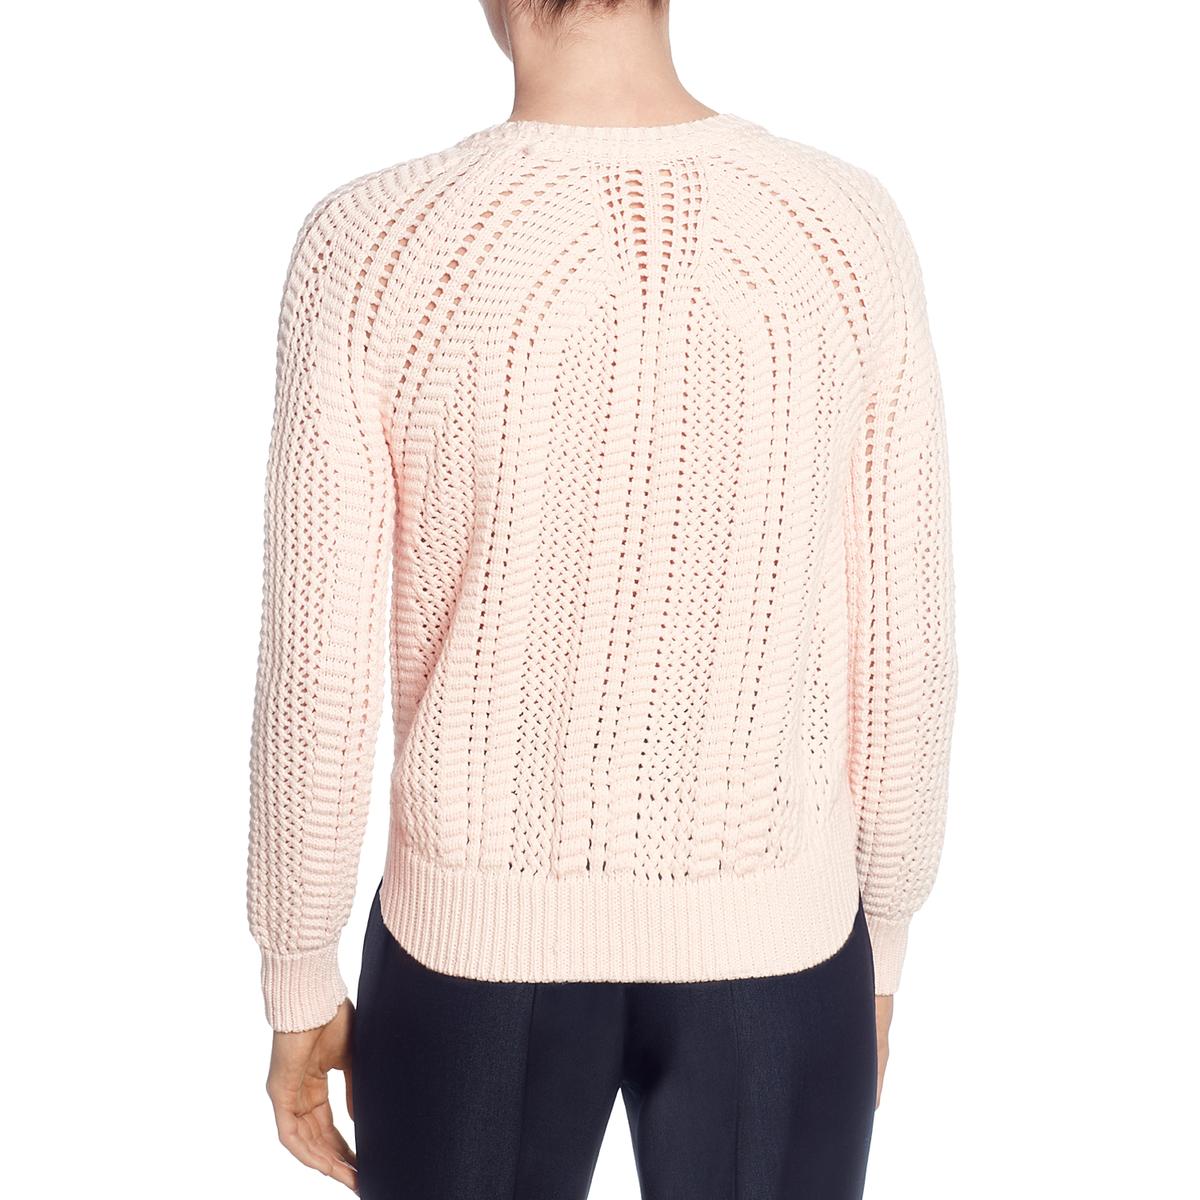 T Tahari Women's Open Stitch Cotton Blend Crew Neck Sweater | eBay